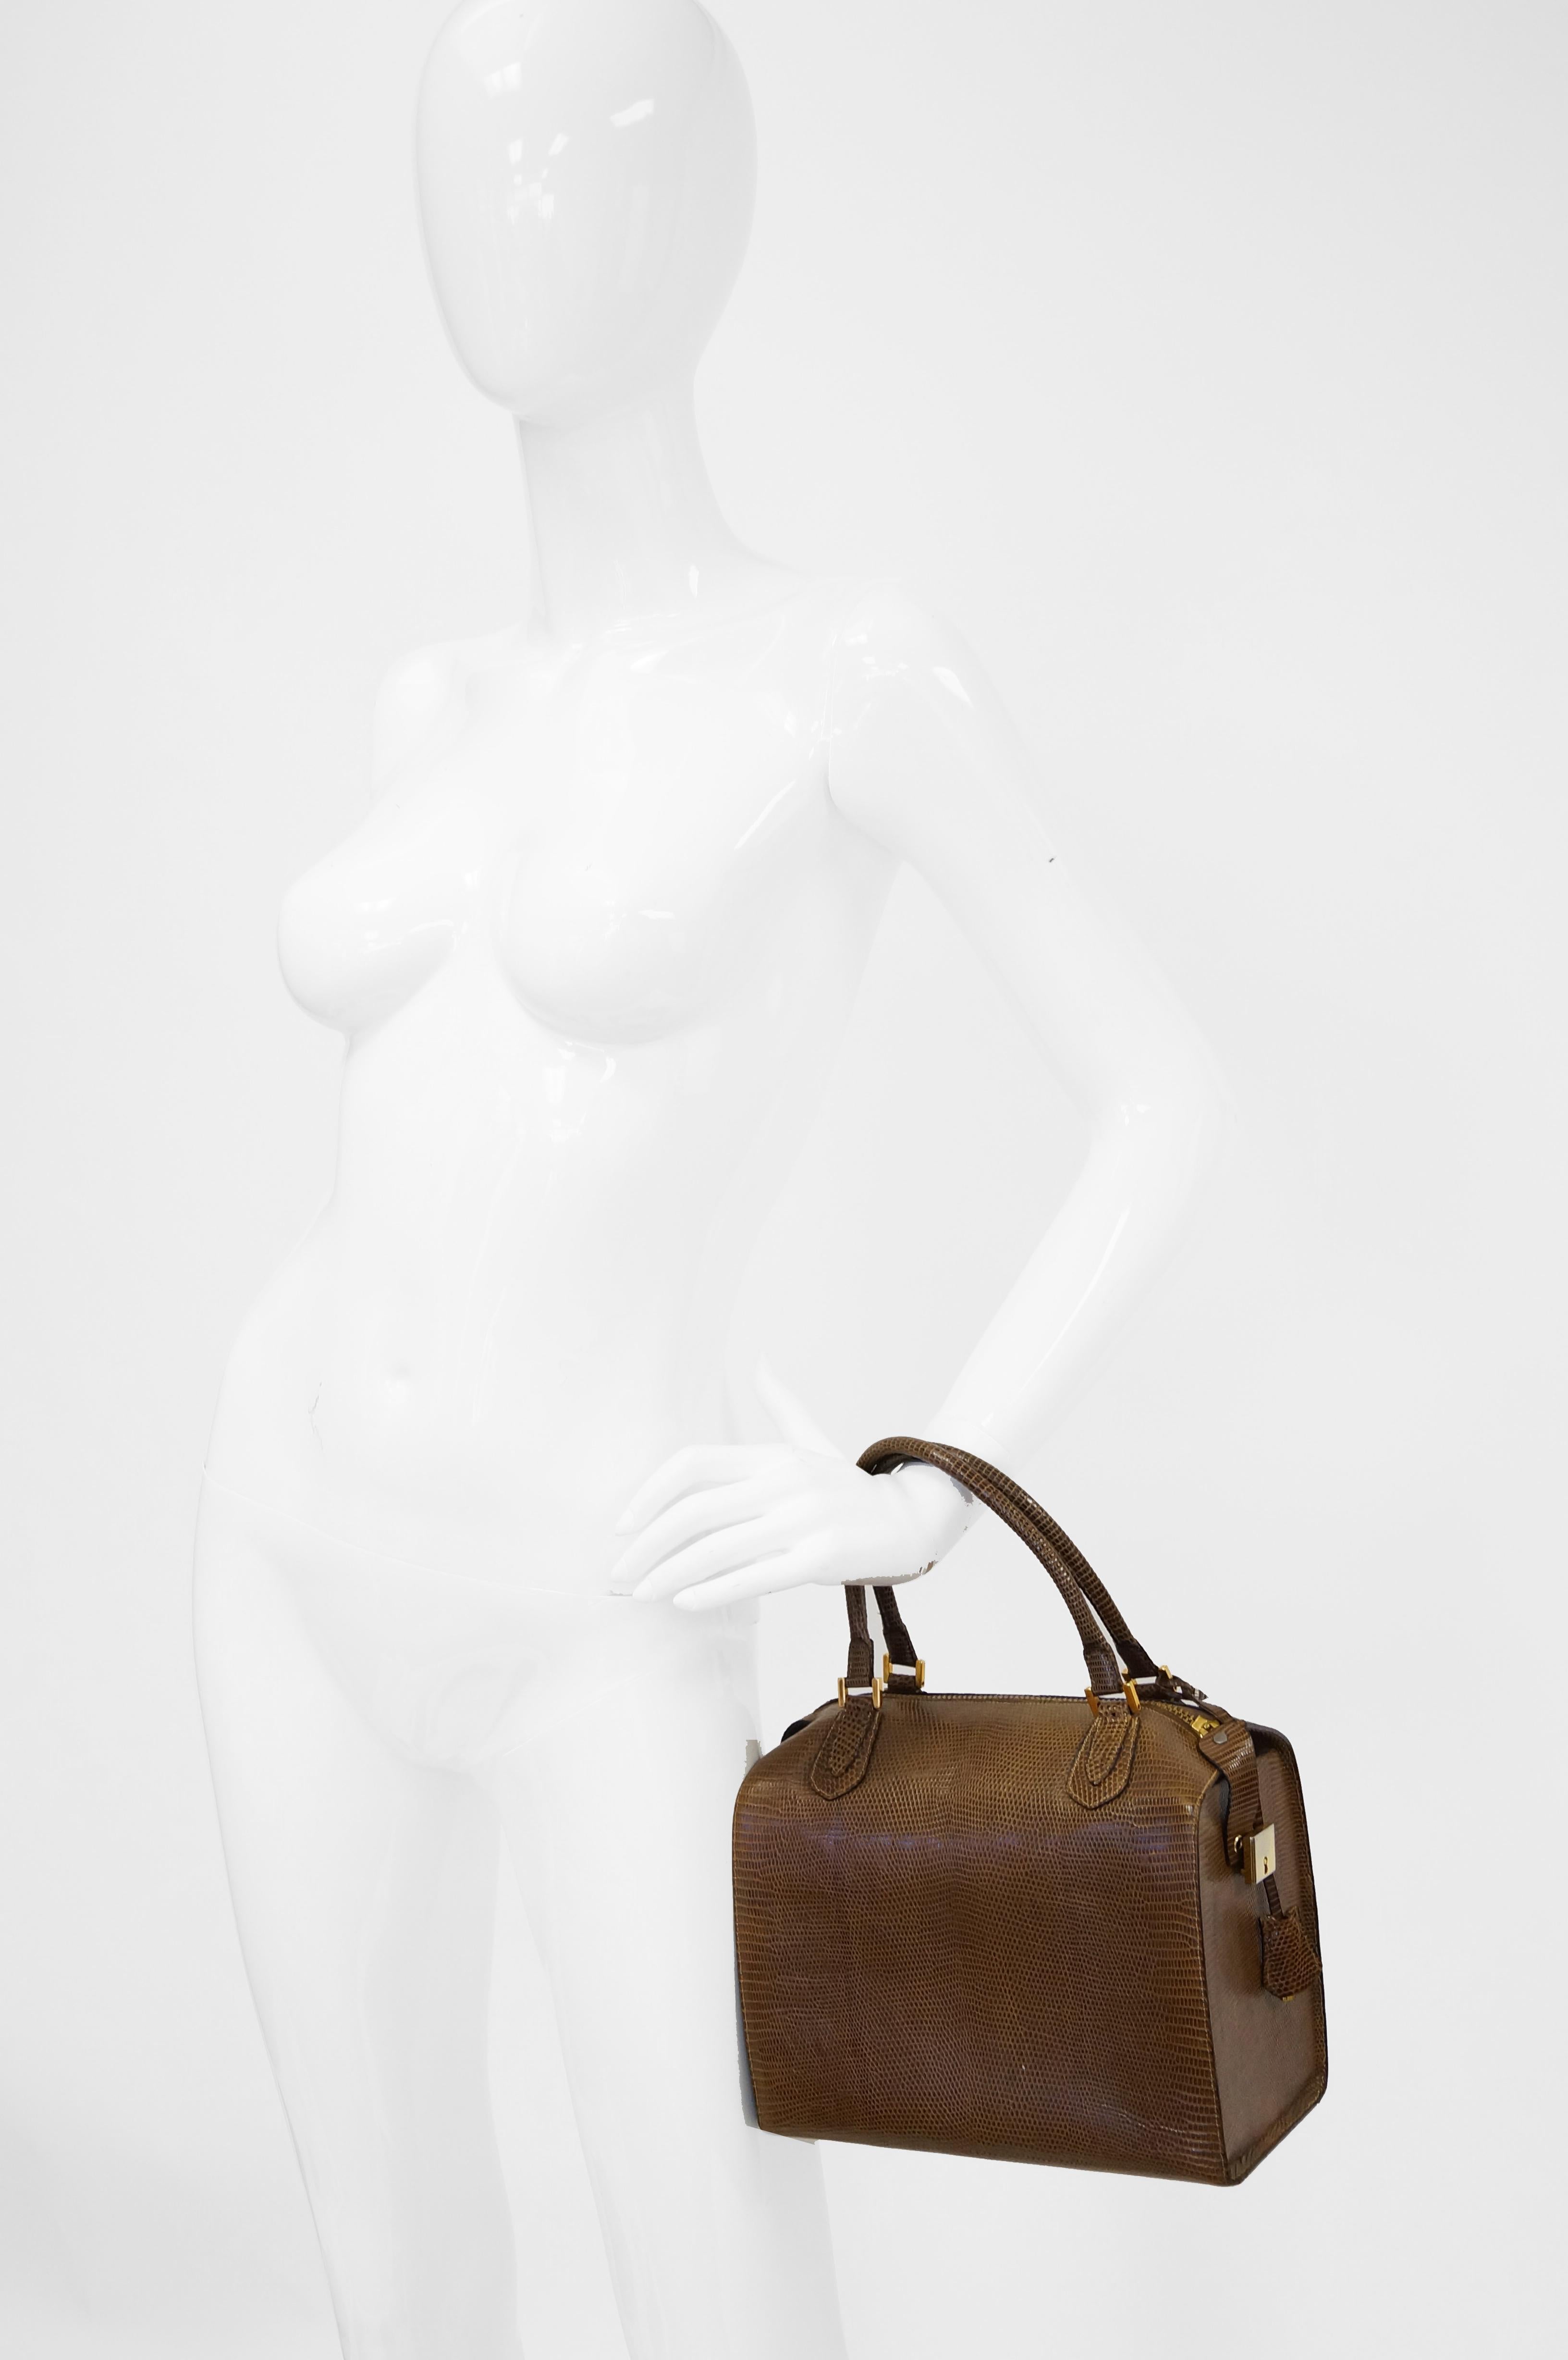 Martin Van Schaak Custom Brown Java Lizard Skin Handbag Box Bag, 1960s  9